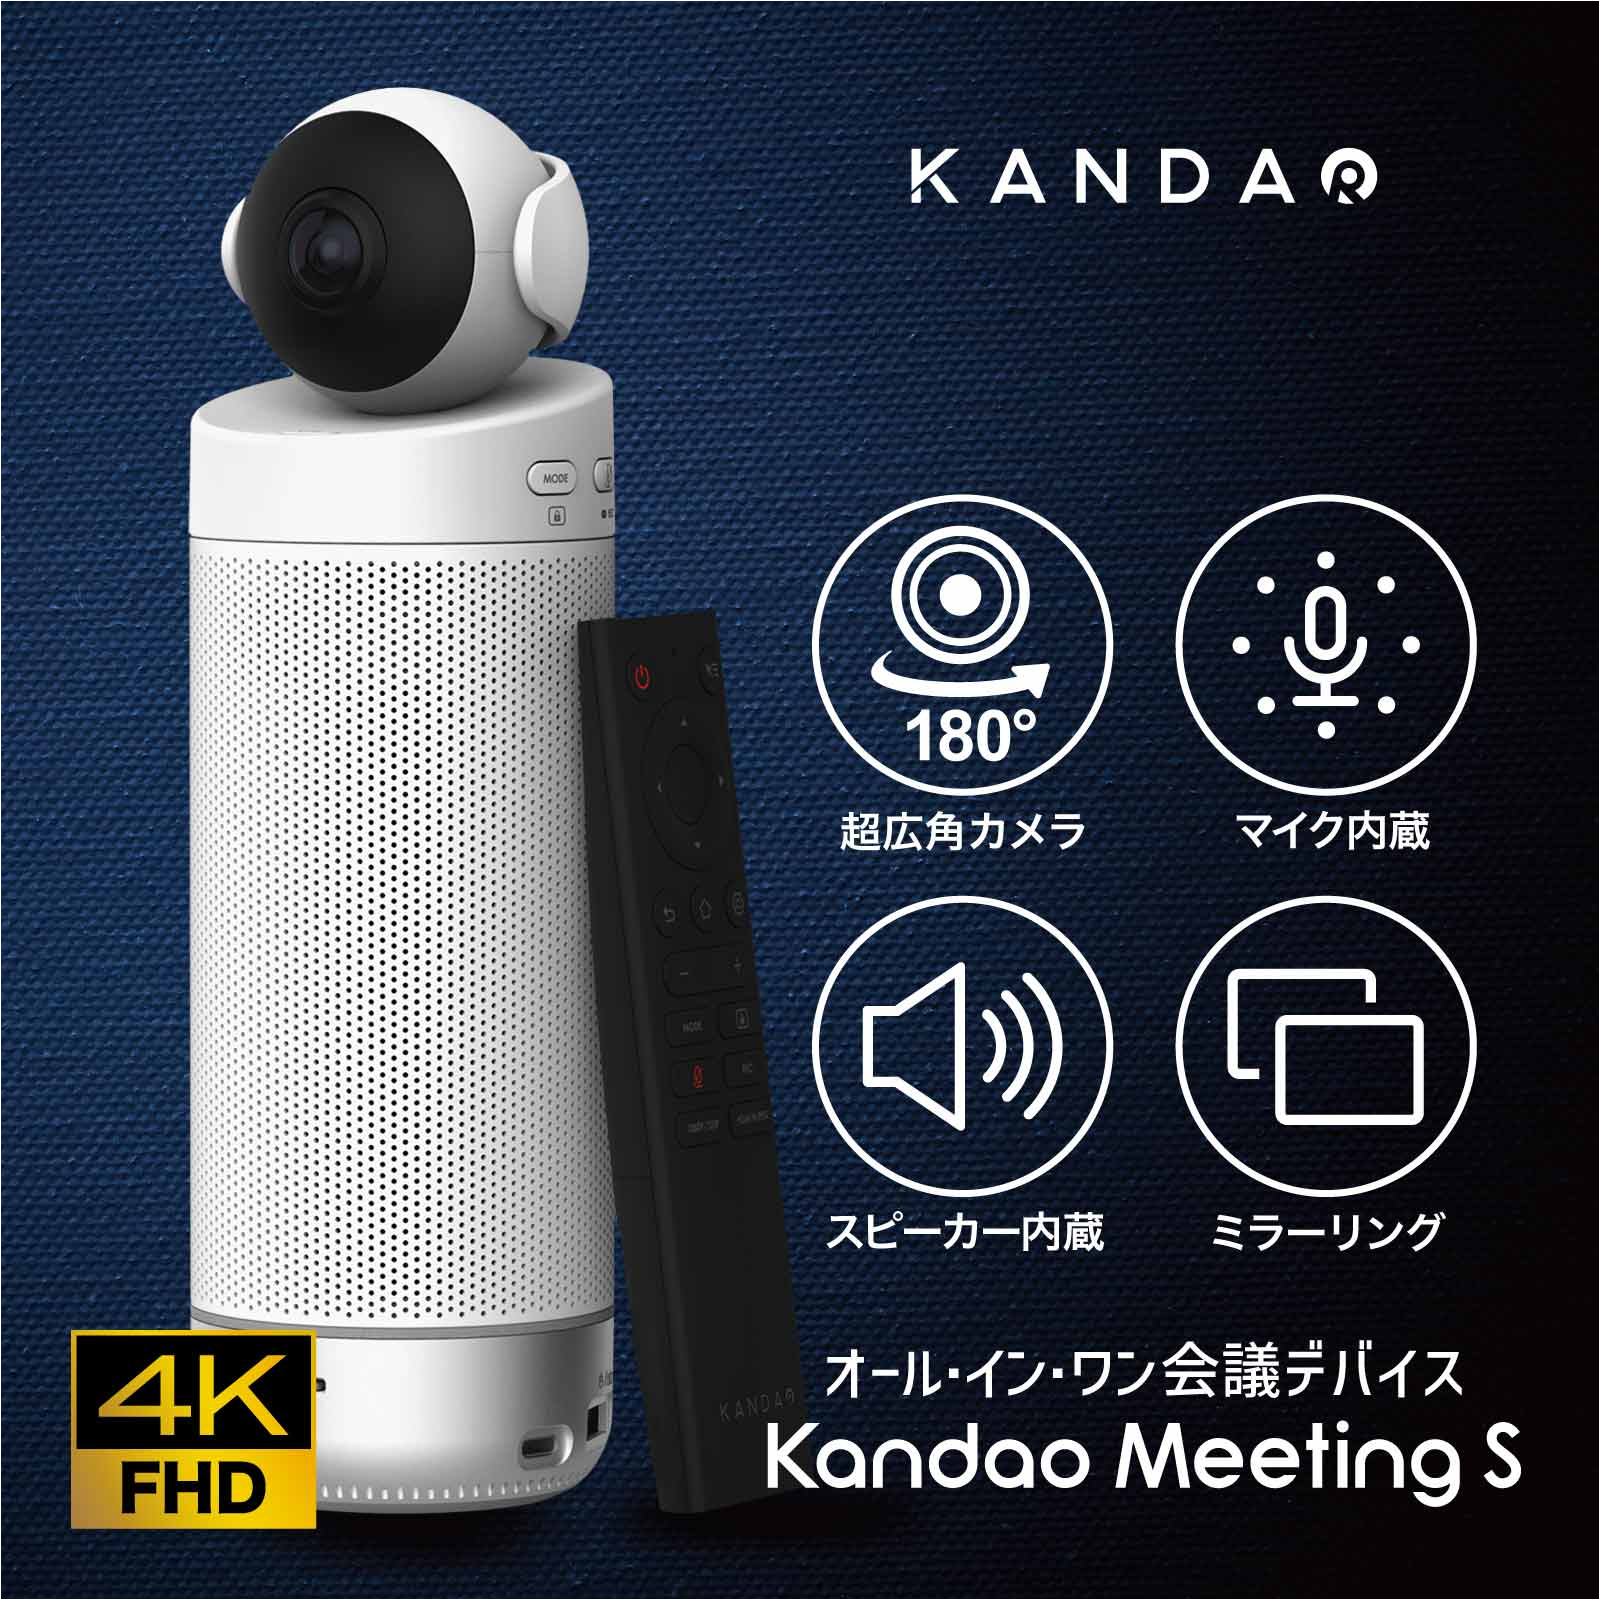 Kandao Meeting S Webカメラ / AI機能搭載 / 超広角180度